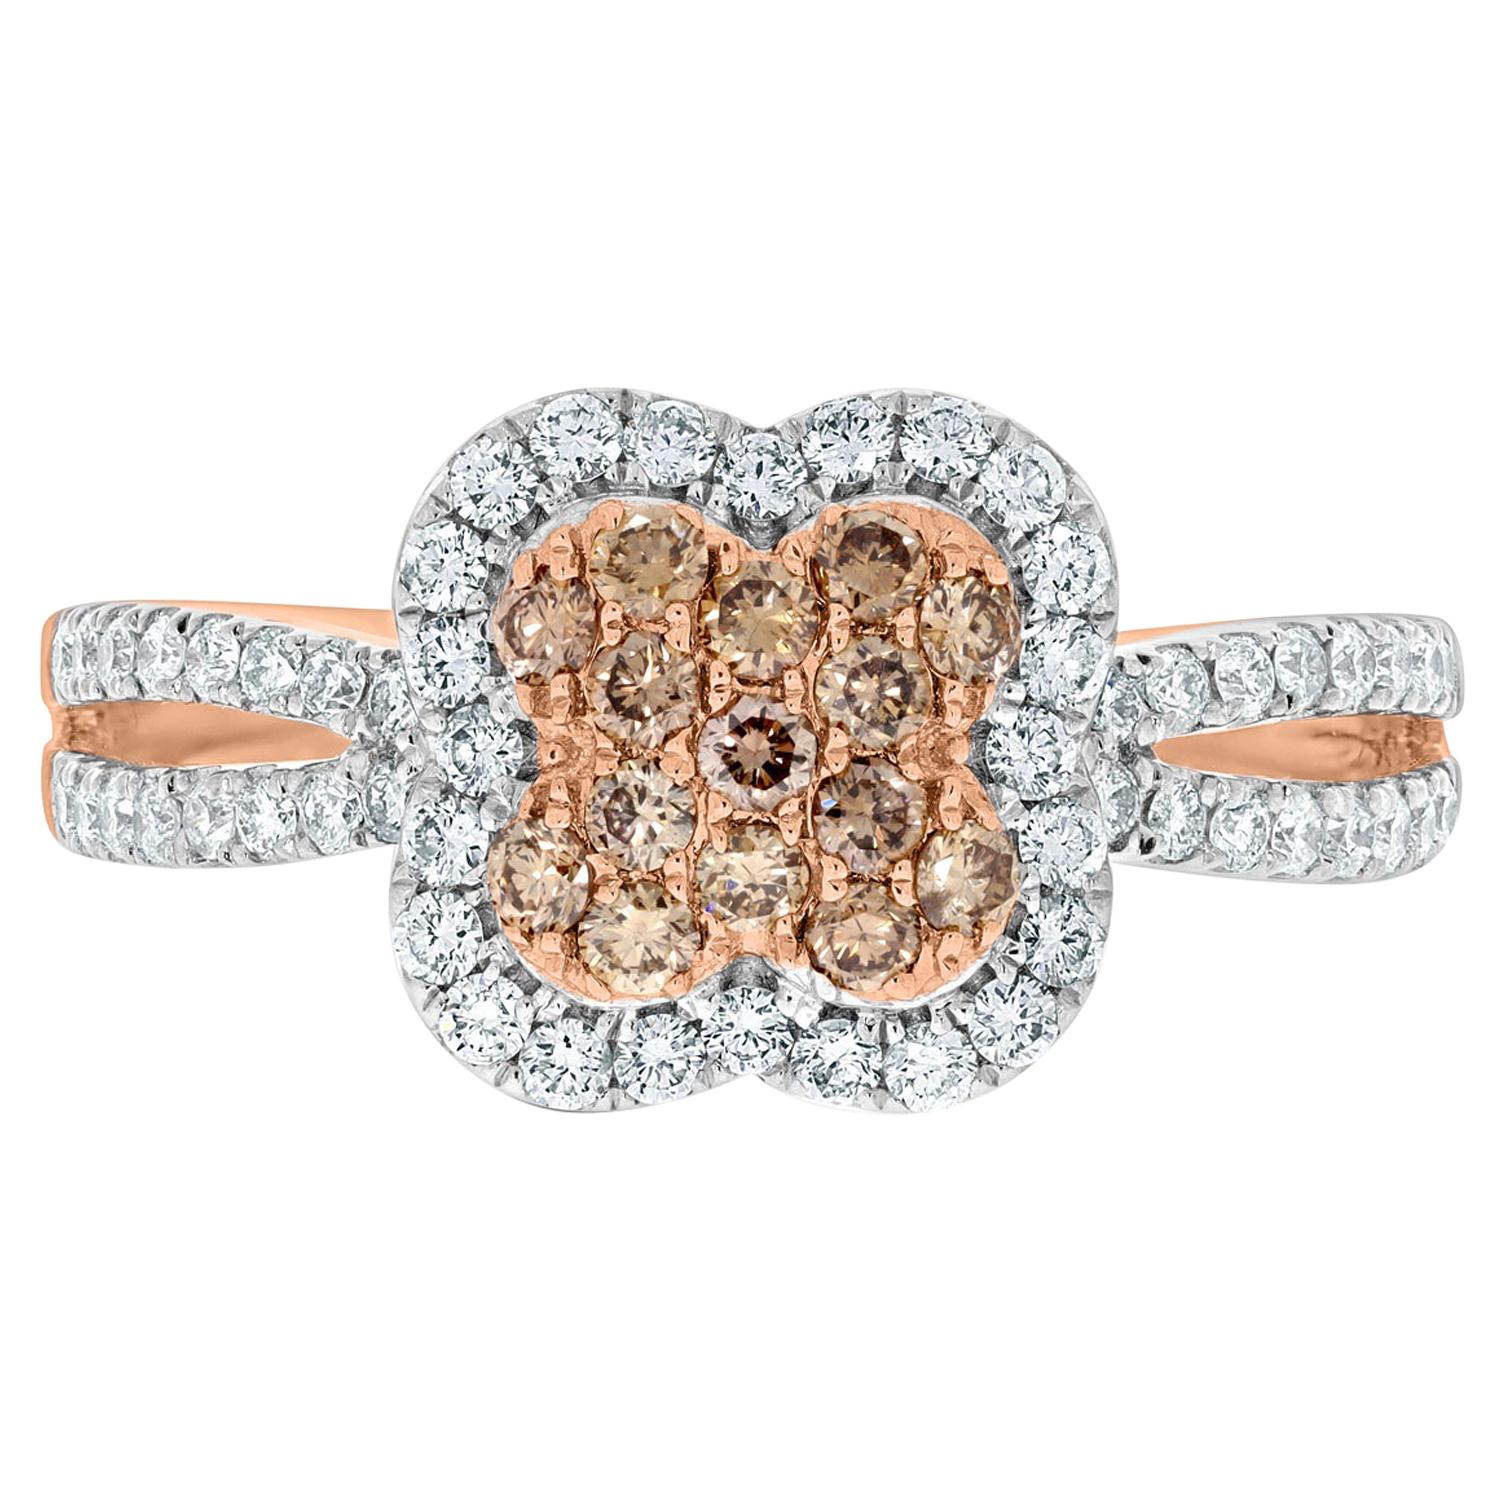 Gem Bleu 0.28 Carat Pink Diamonds Ring with 0.43 Carat Diamonds Set in 14K Gold For Sale